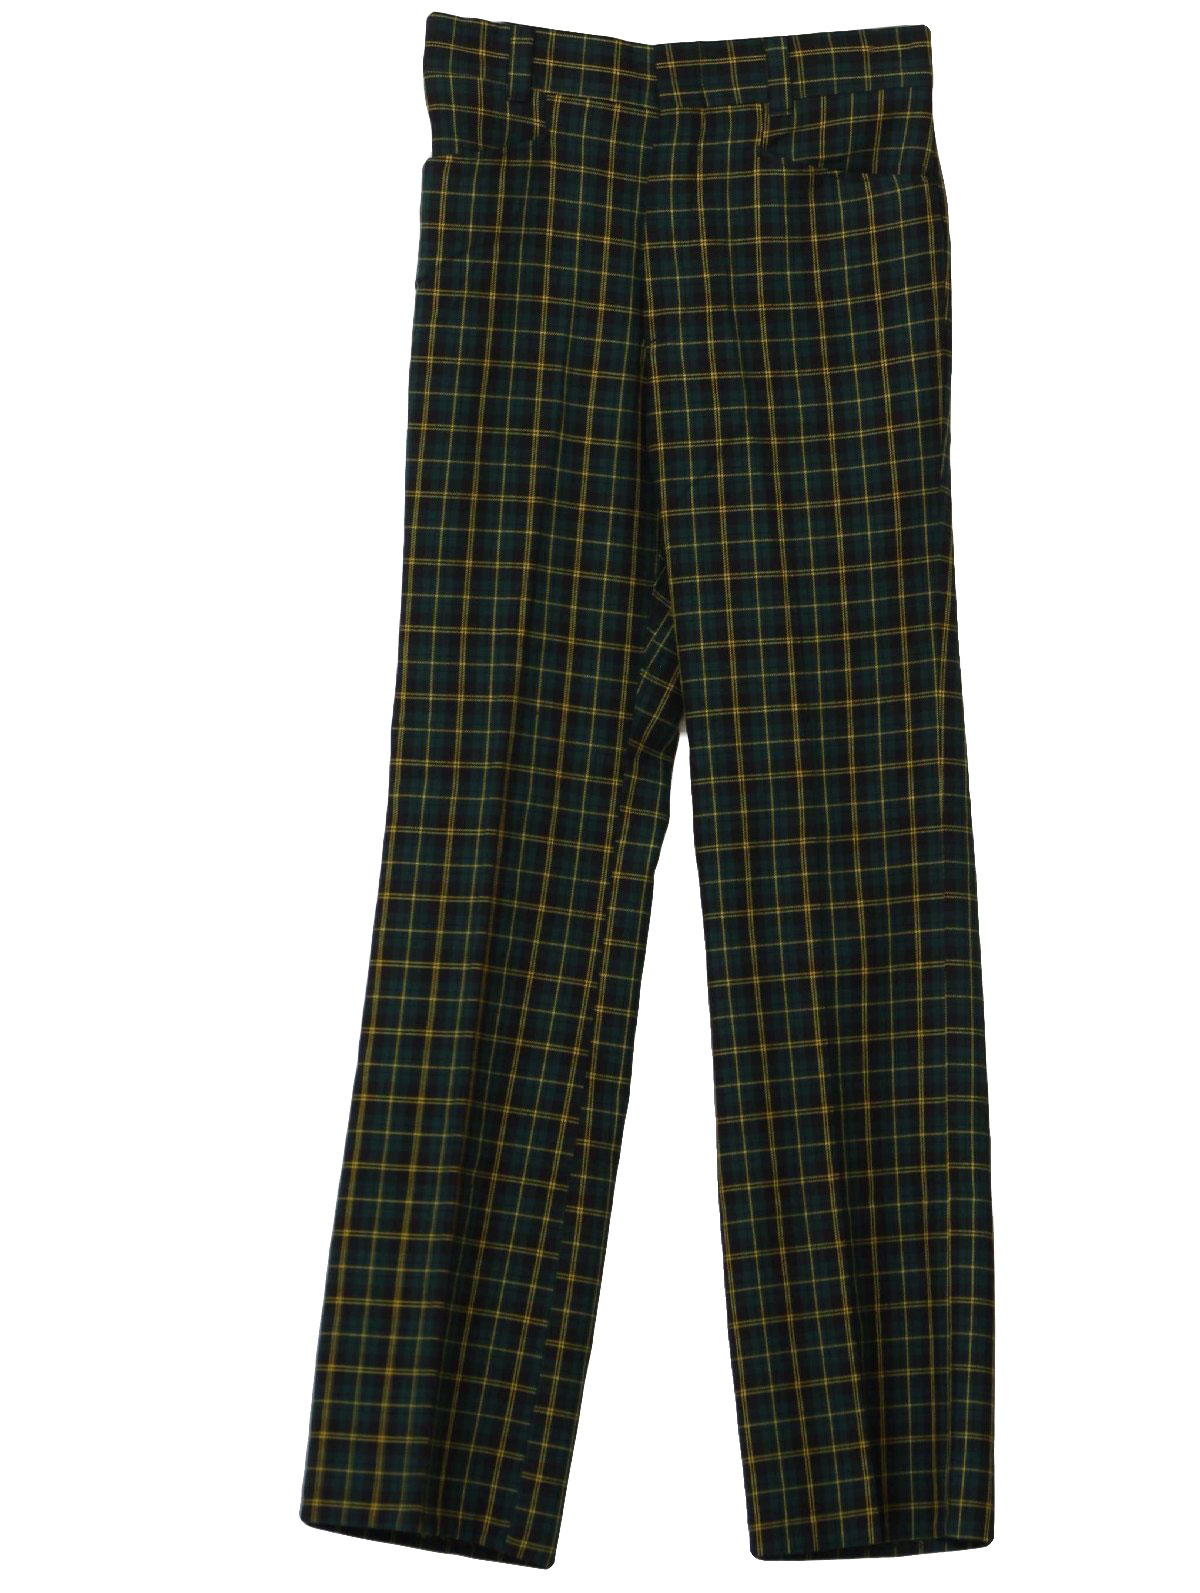 70's Vintage Flared Pants / Flares: 70s -Levis Pantella- Mens green ...